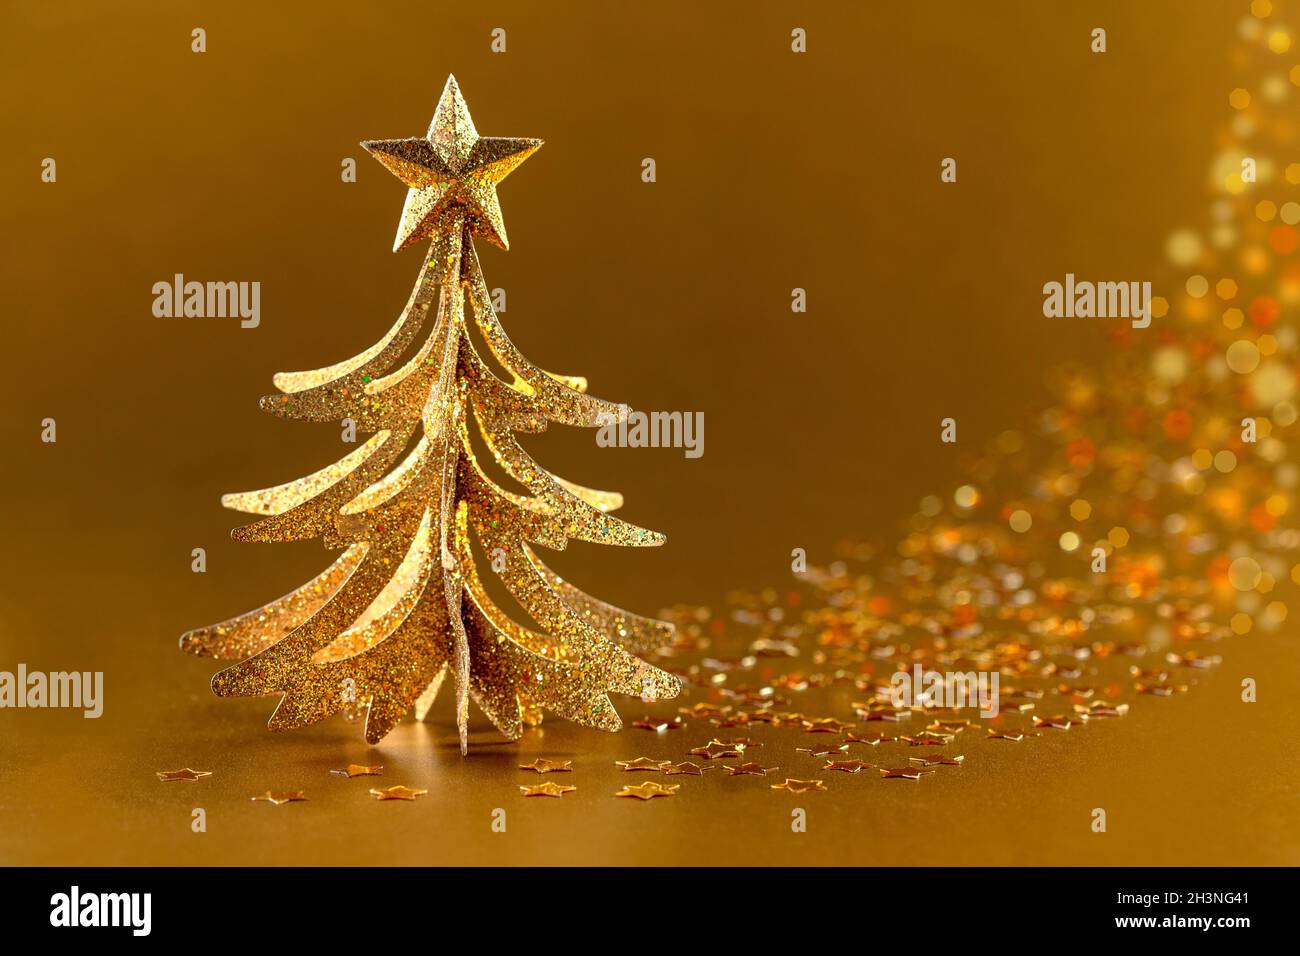 Festive golden Christmas tree. Stock Photo